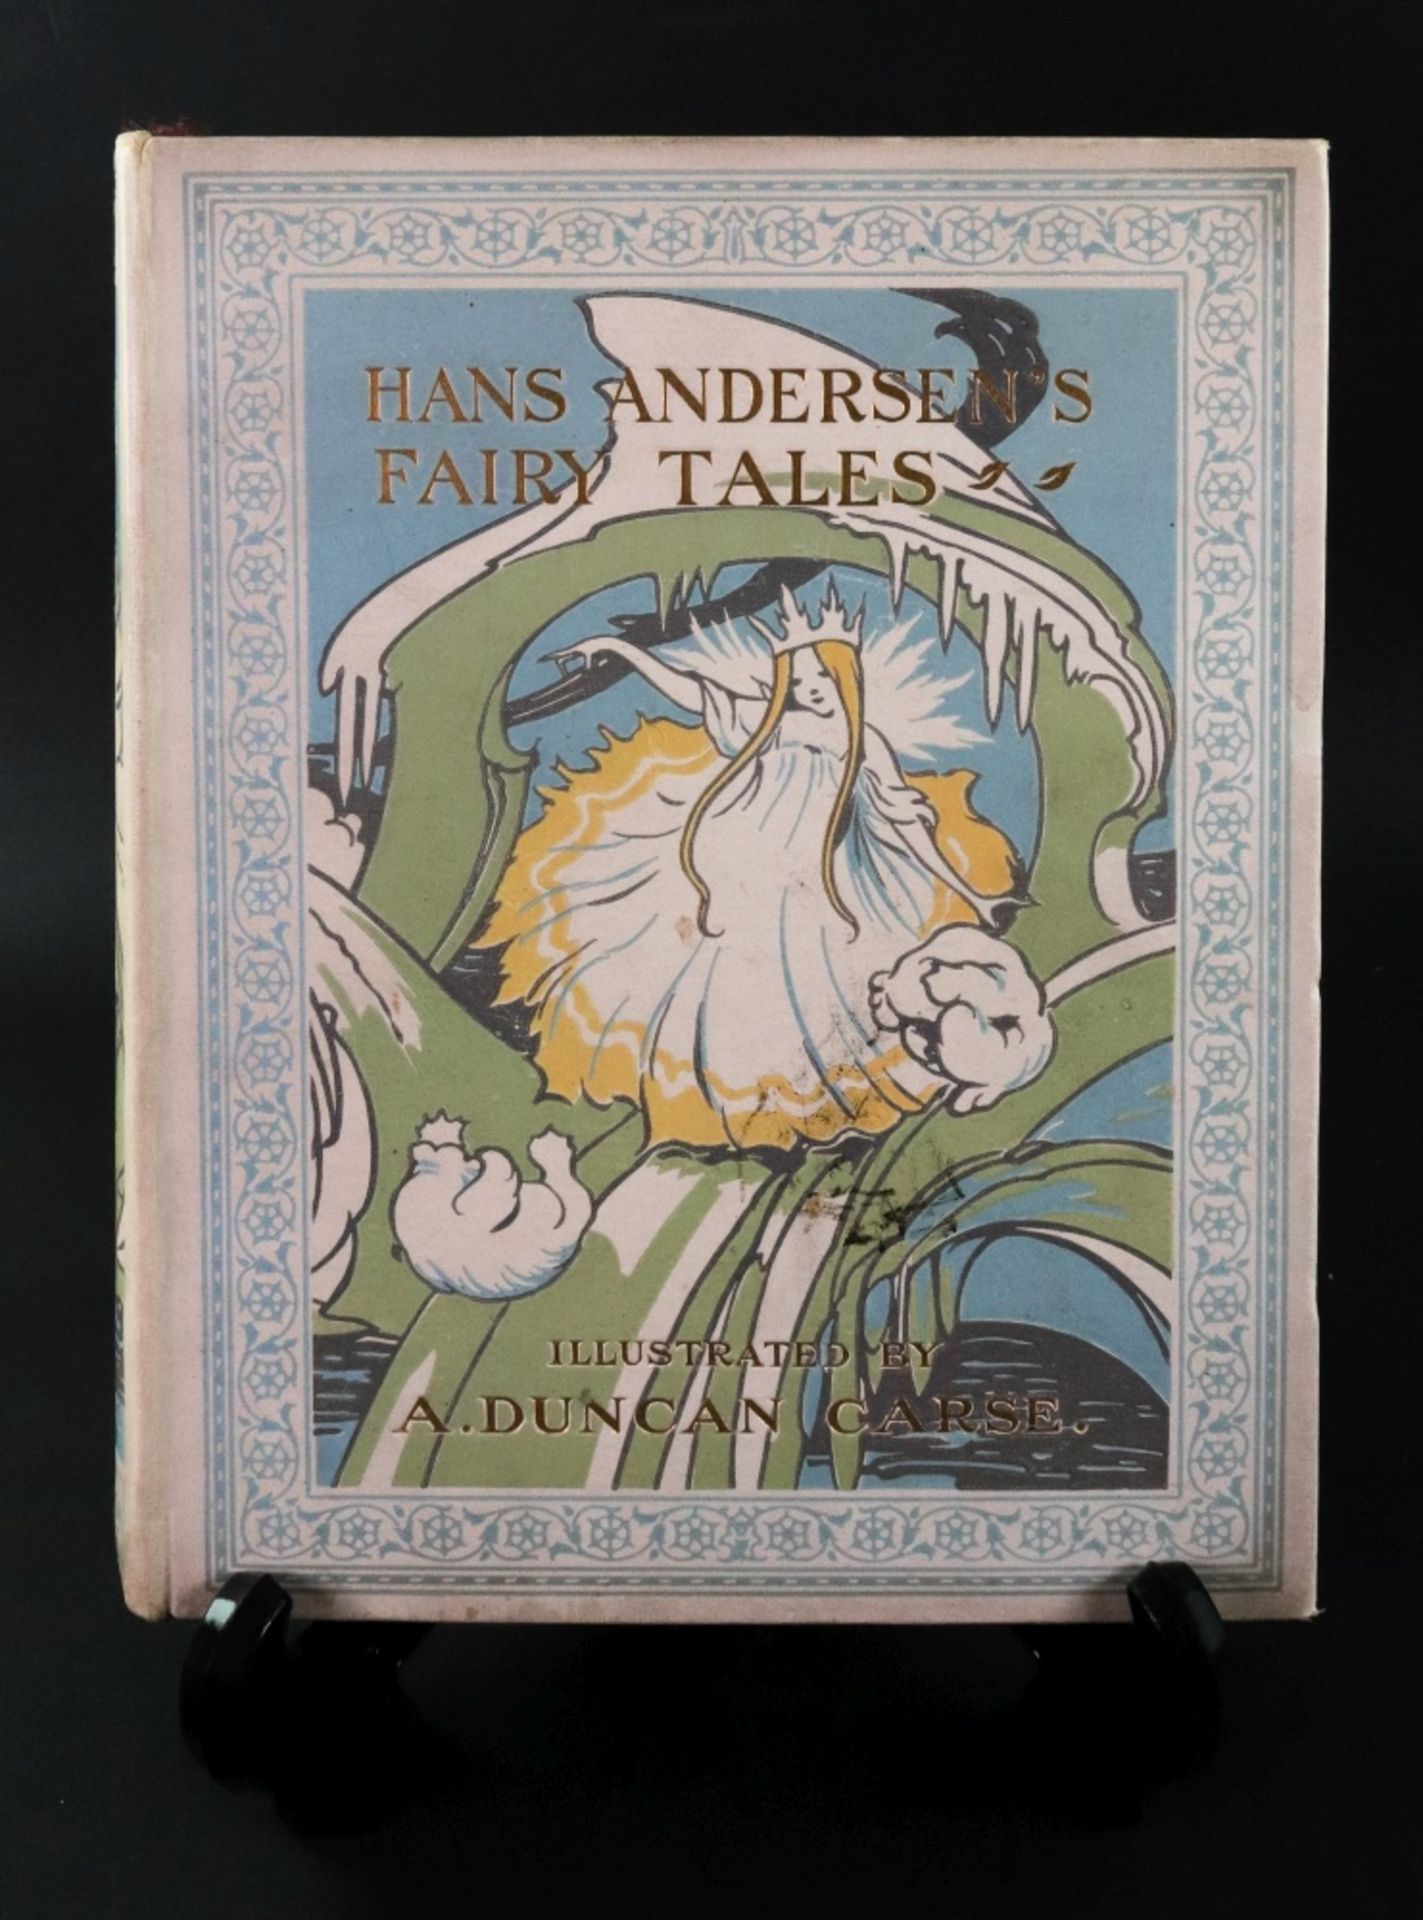 ANDERSEN (H C) Hans Andersen's Fairy Tales, illustrated by A. Duncan Carse, de luxe edition no.